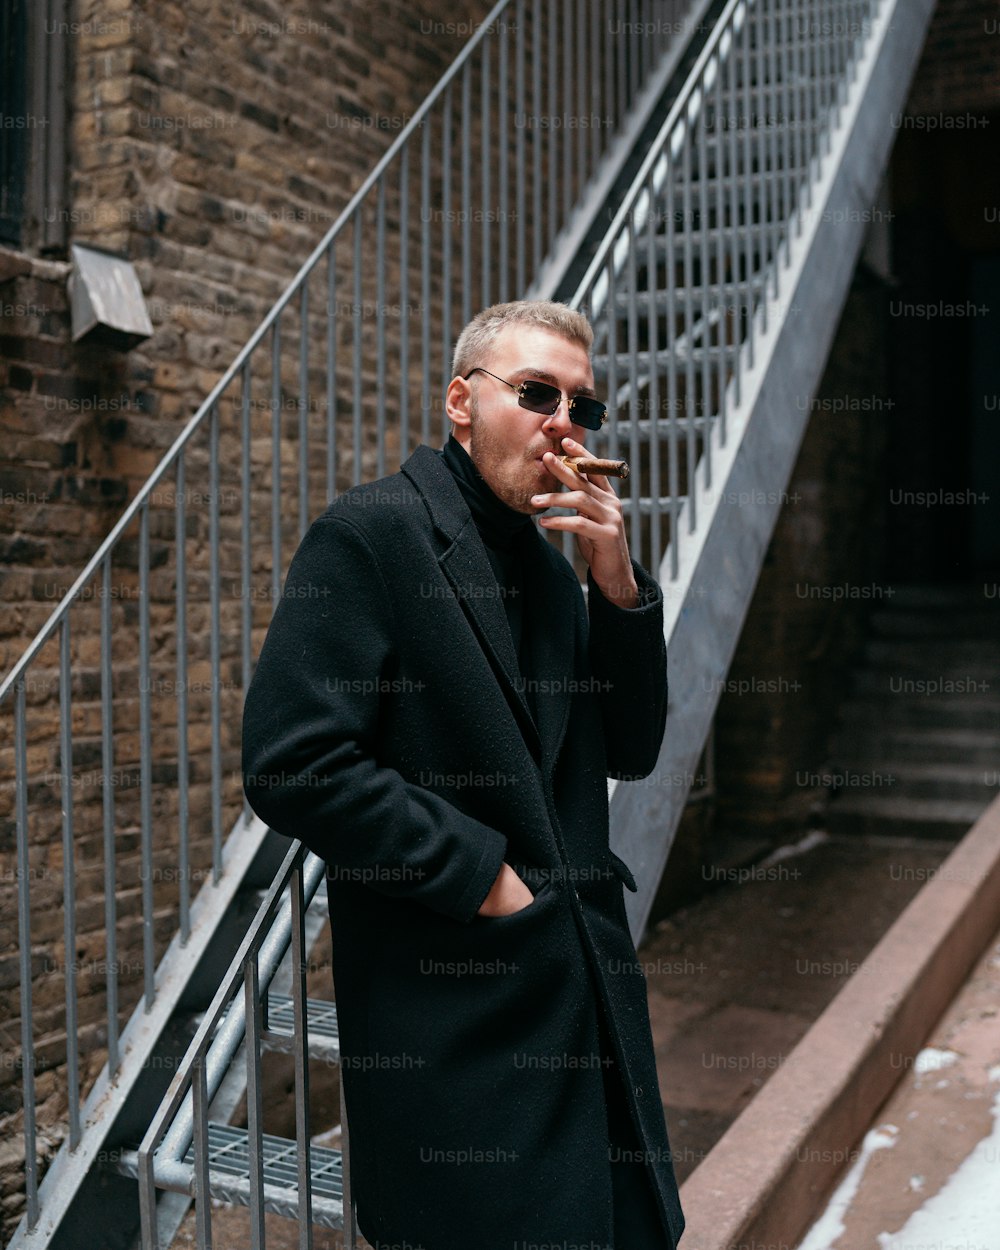 a man in a black coat smoking a cigarette